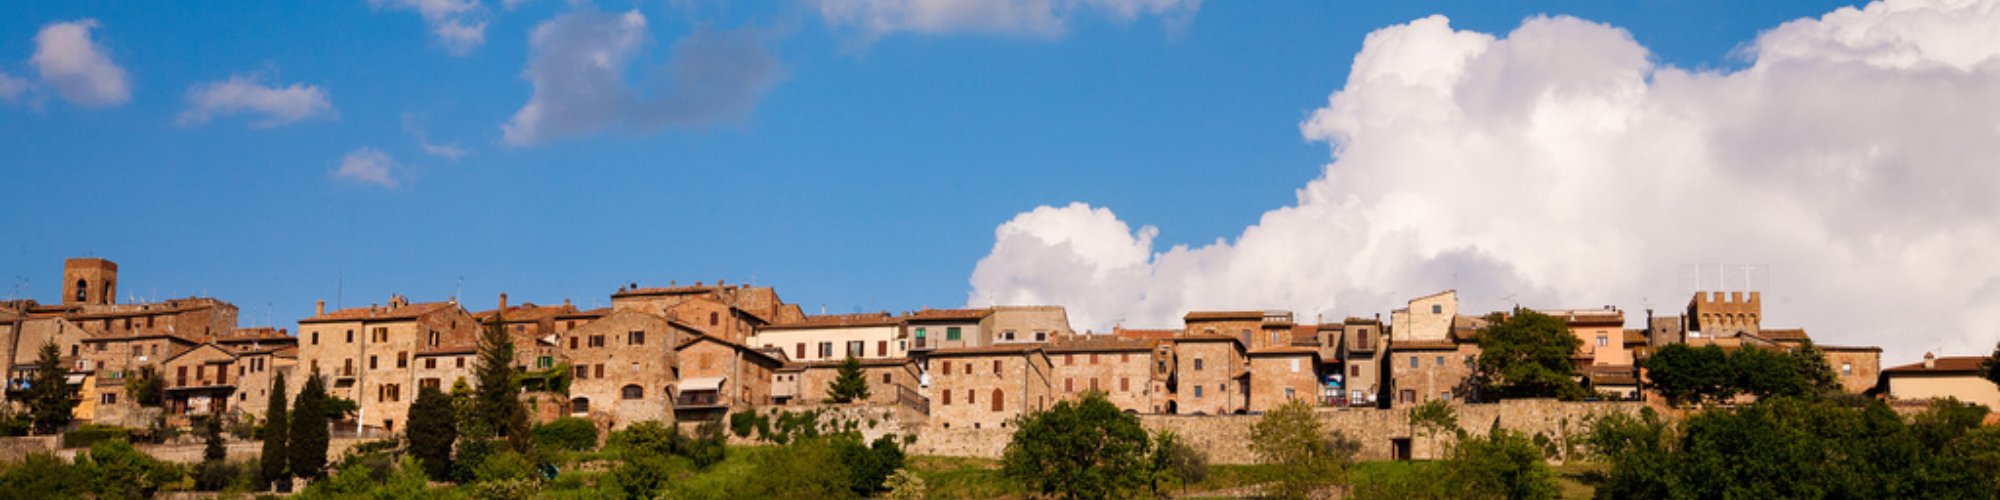 Casole-dElsa-Tuscany